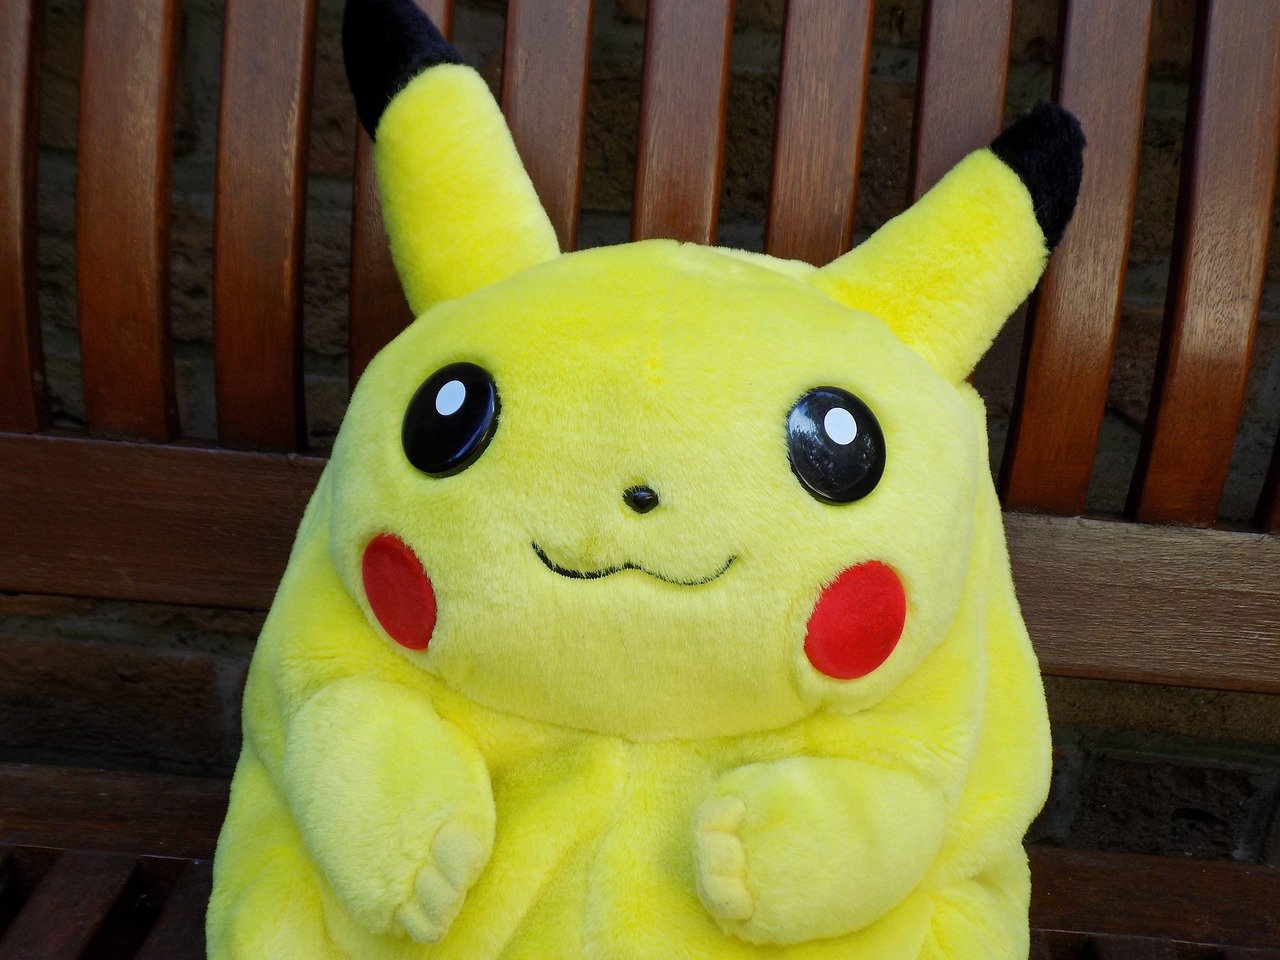 Plush Pikachu toy - best Pikachu Christmas gifts